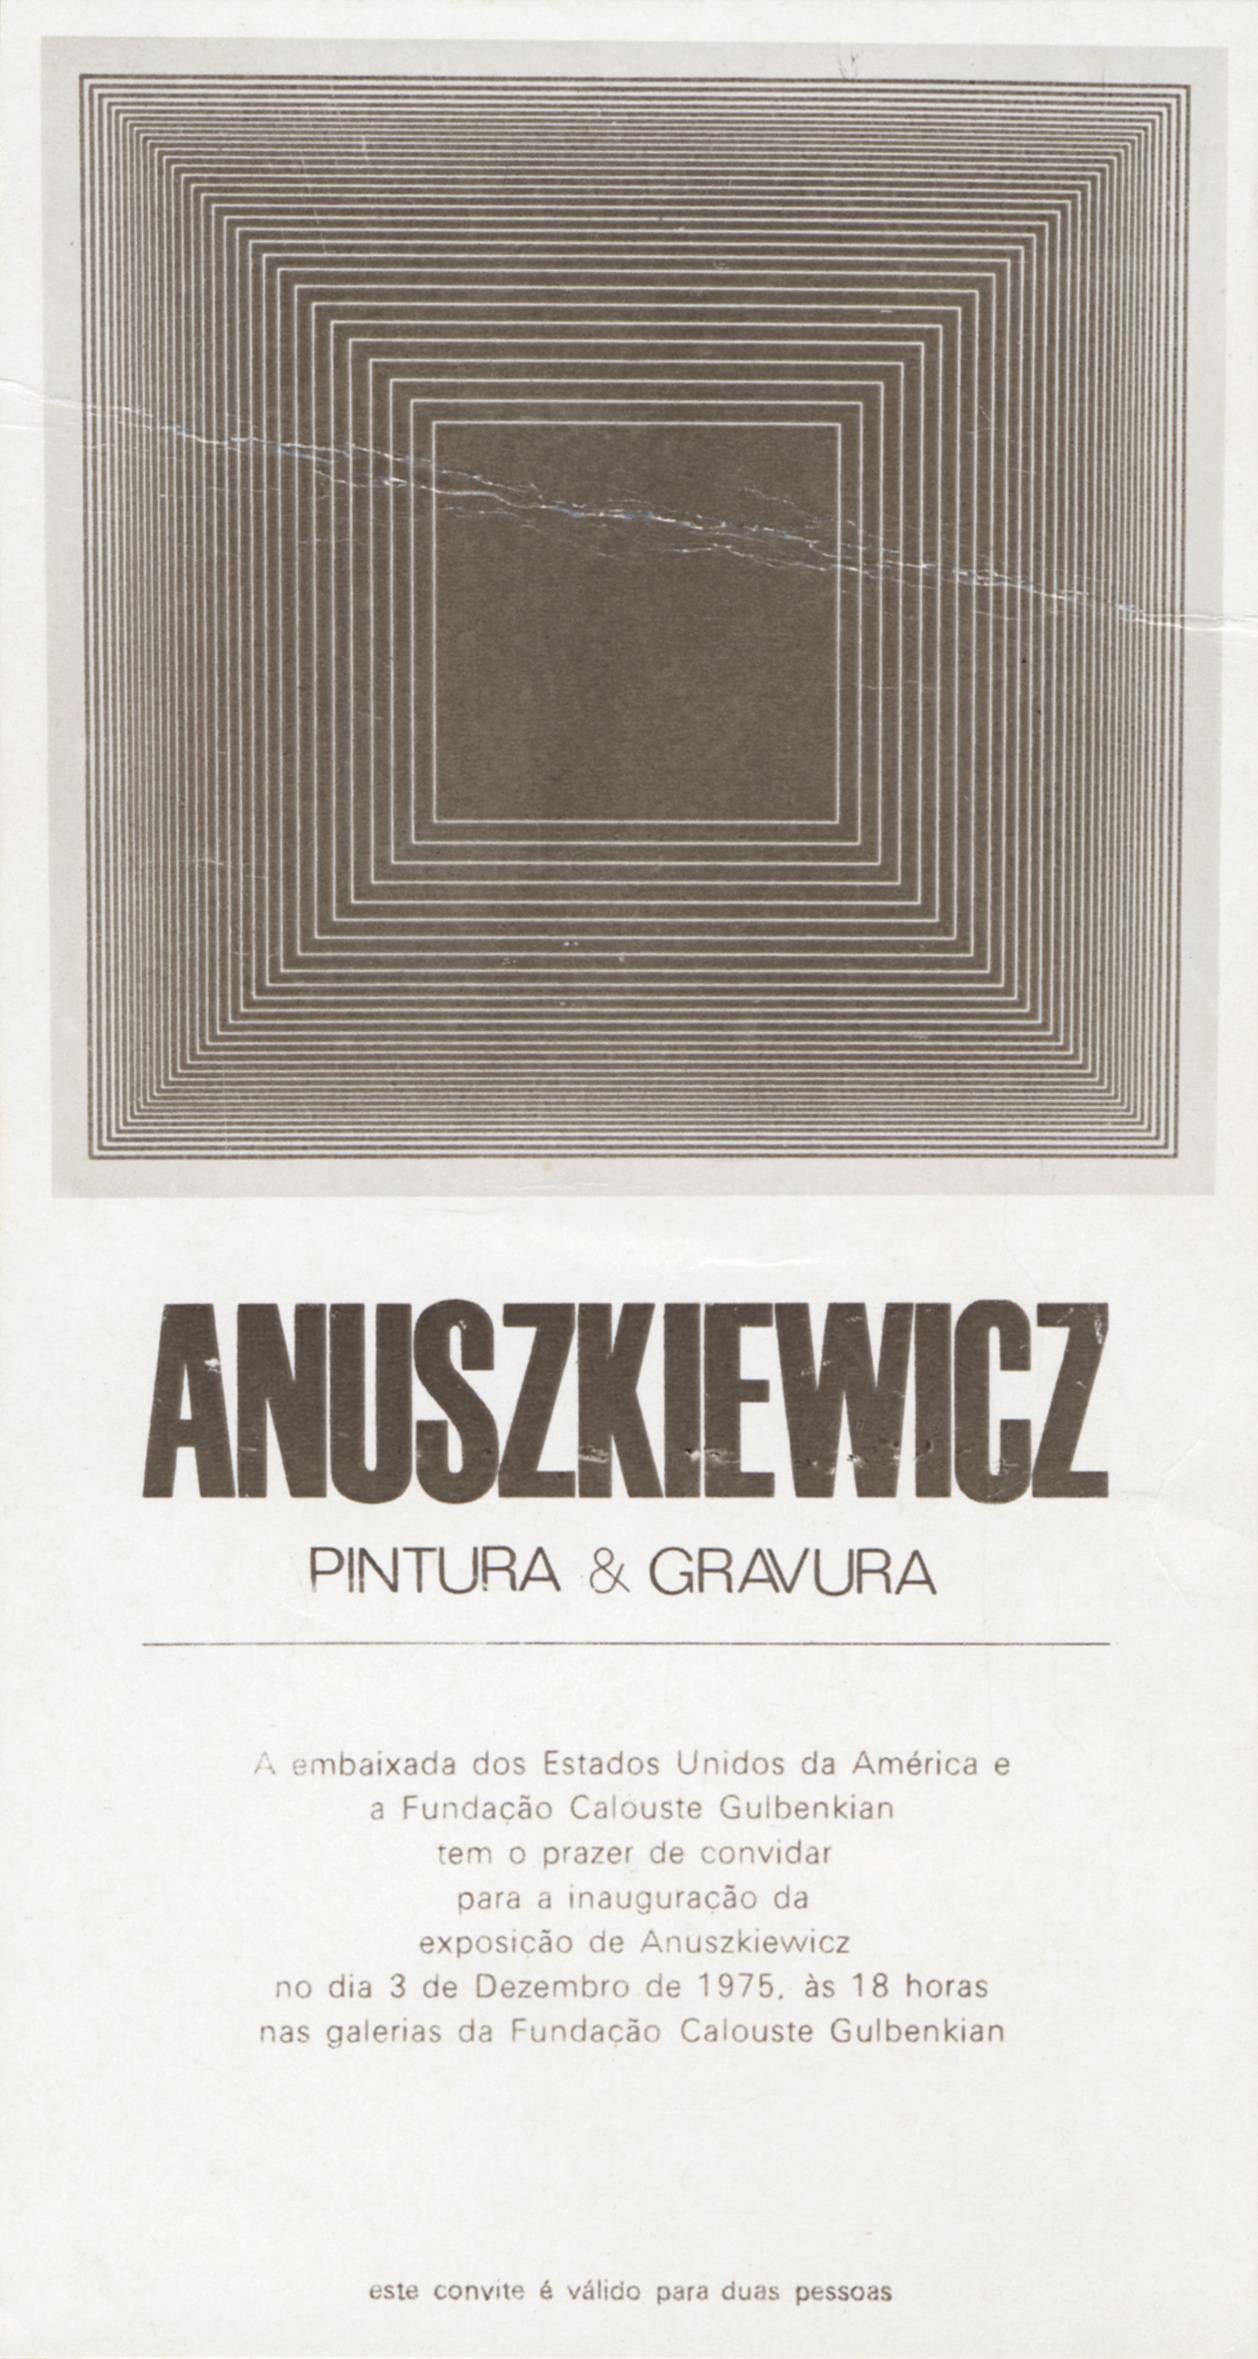 Anuszkiewicz. Pintura & Gravura